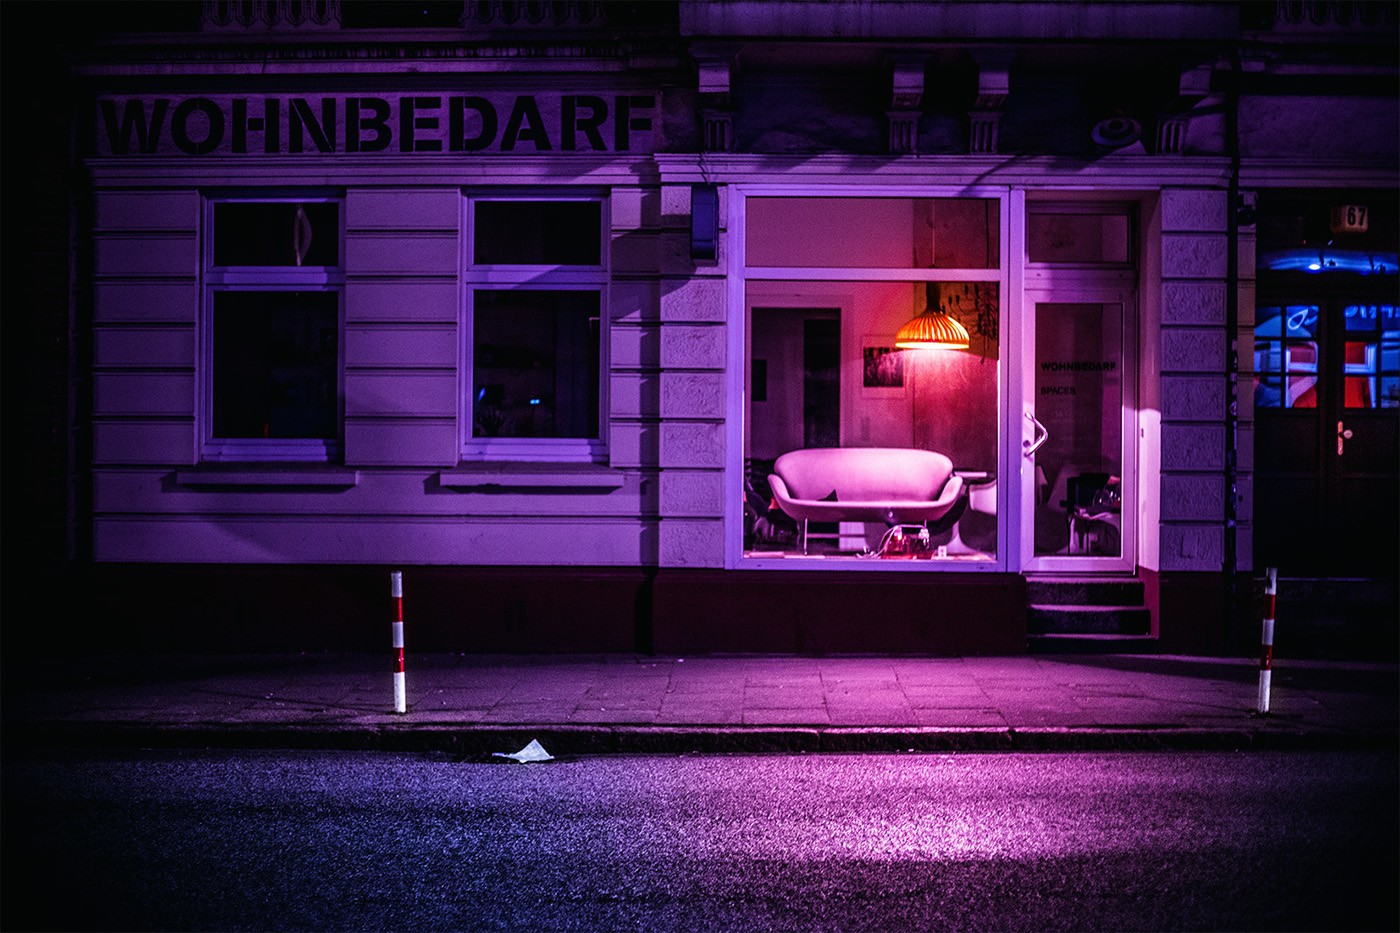 Фиолетовая улица